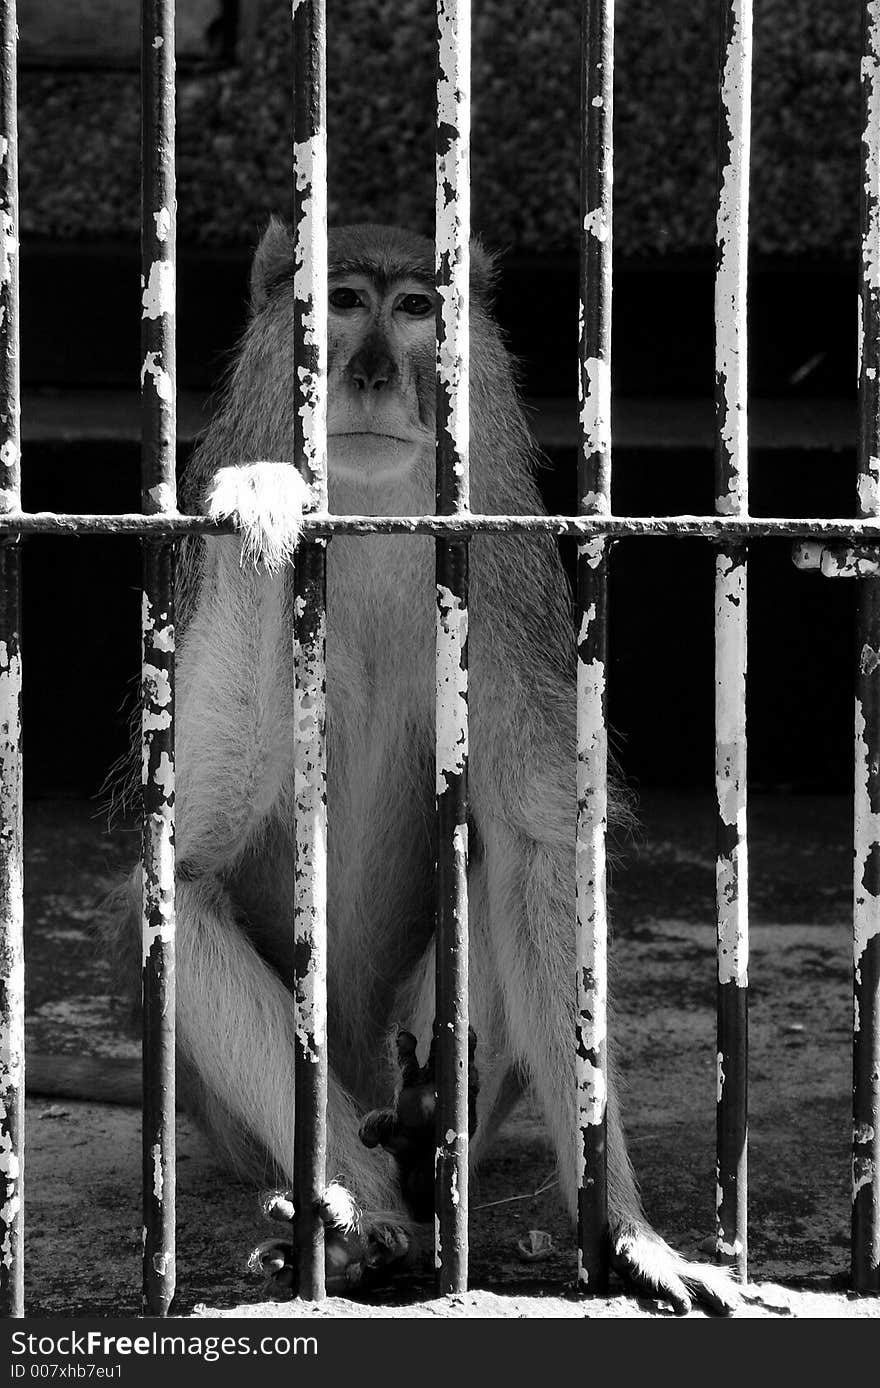 A sad small monkey behind bars. A sad small monkey behind bars.